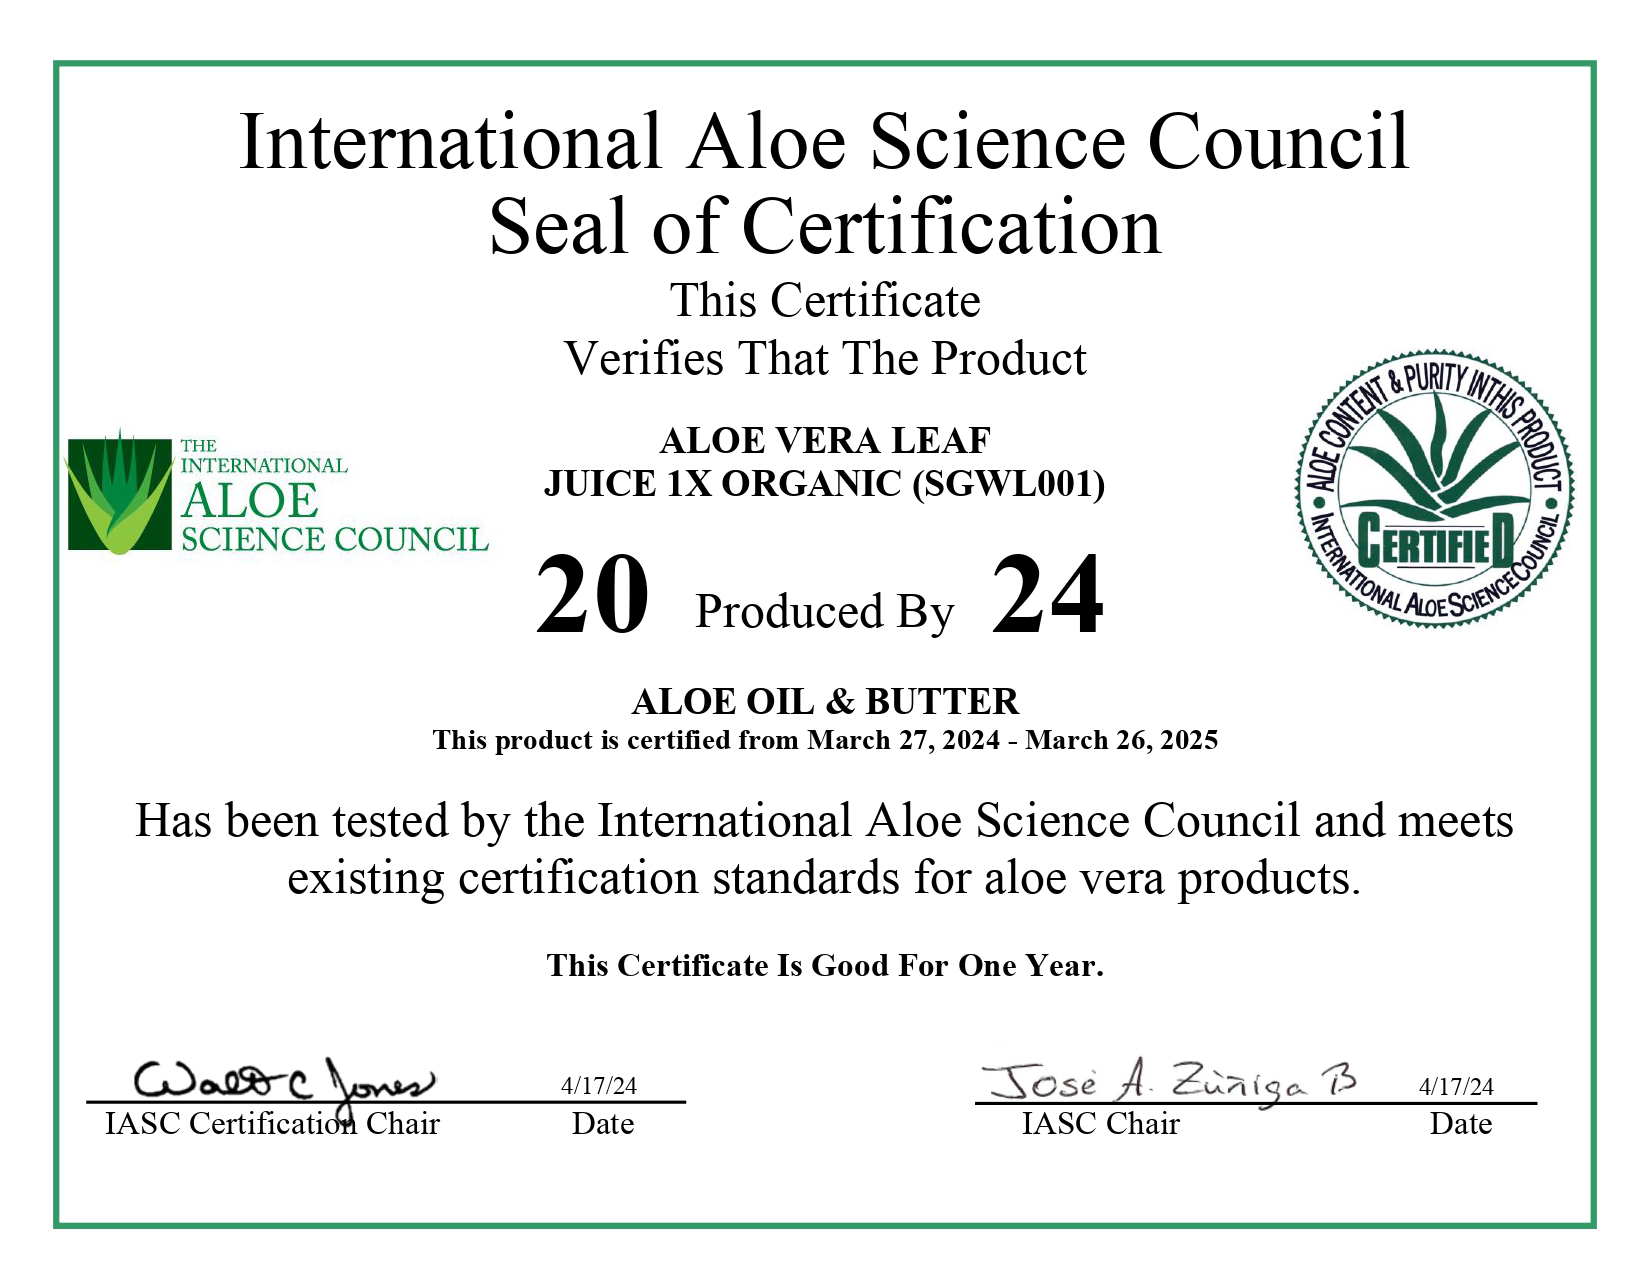 International Aloe Science Council Certification for Aloe Vera Leaf Juice 1X